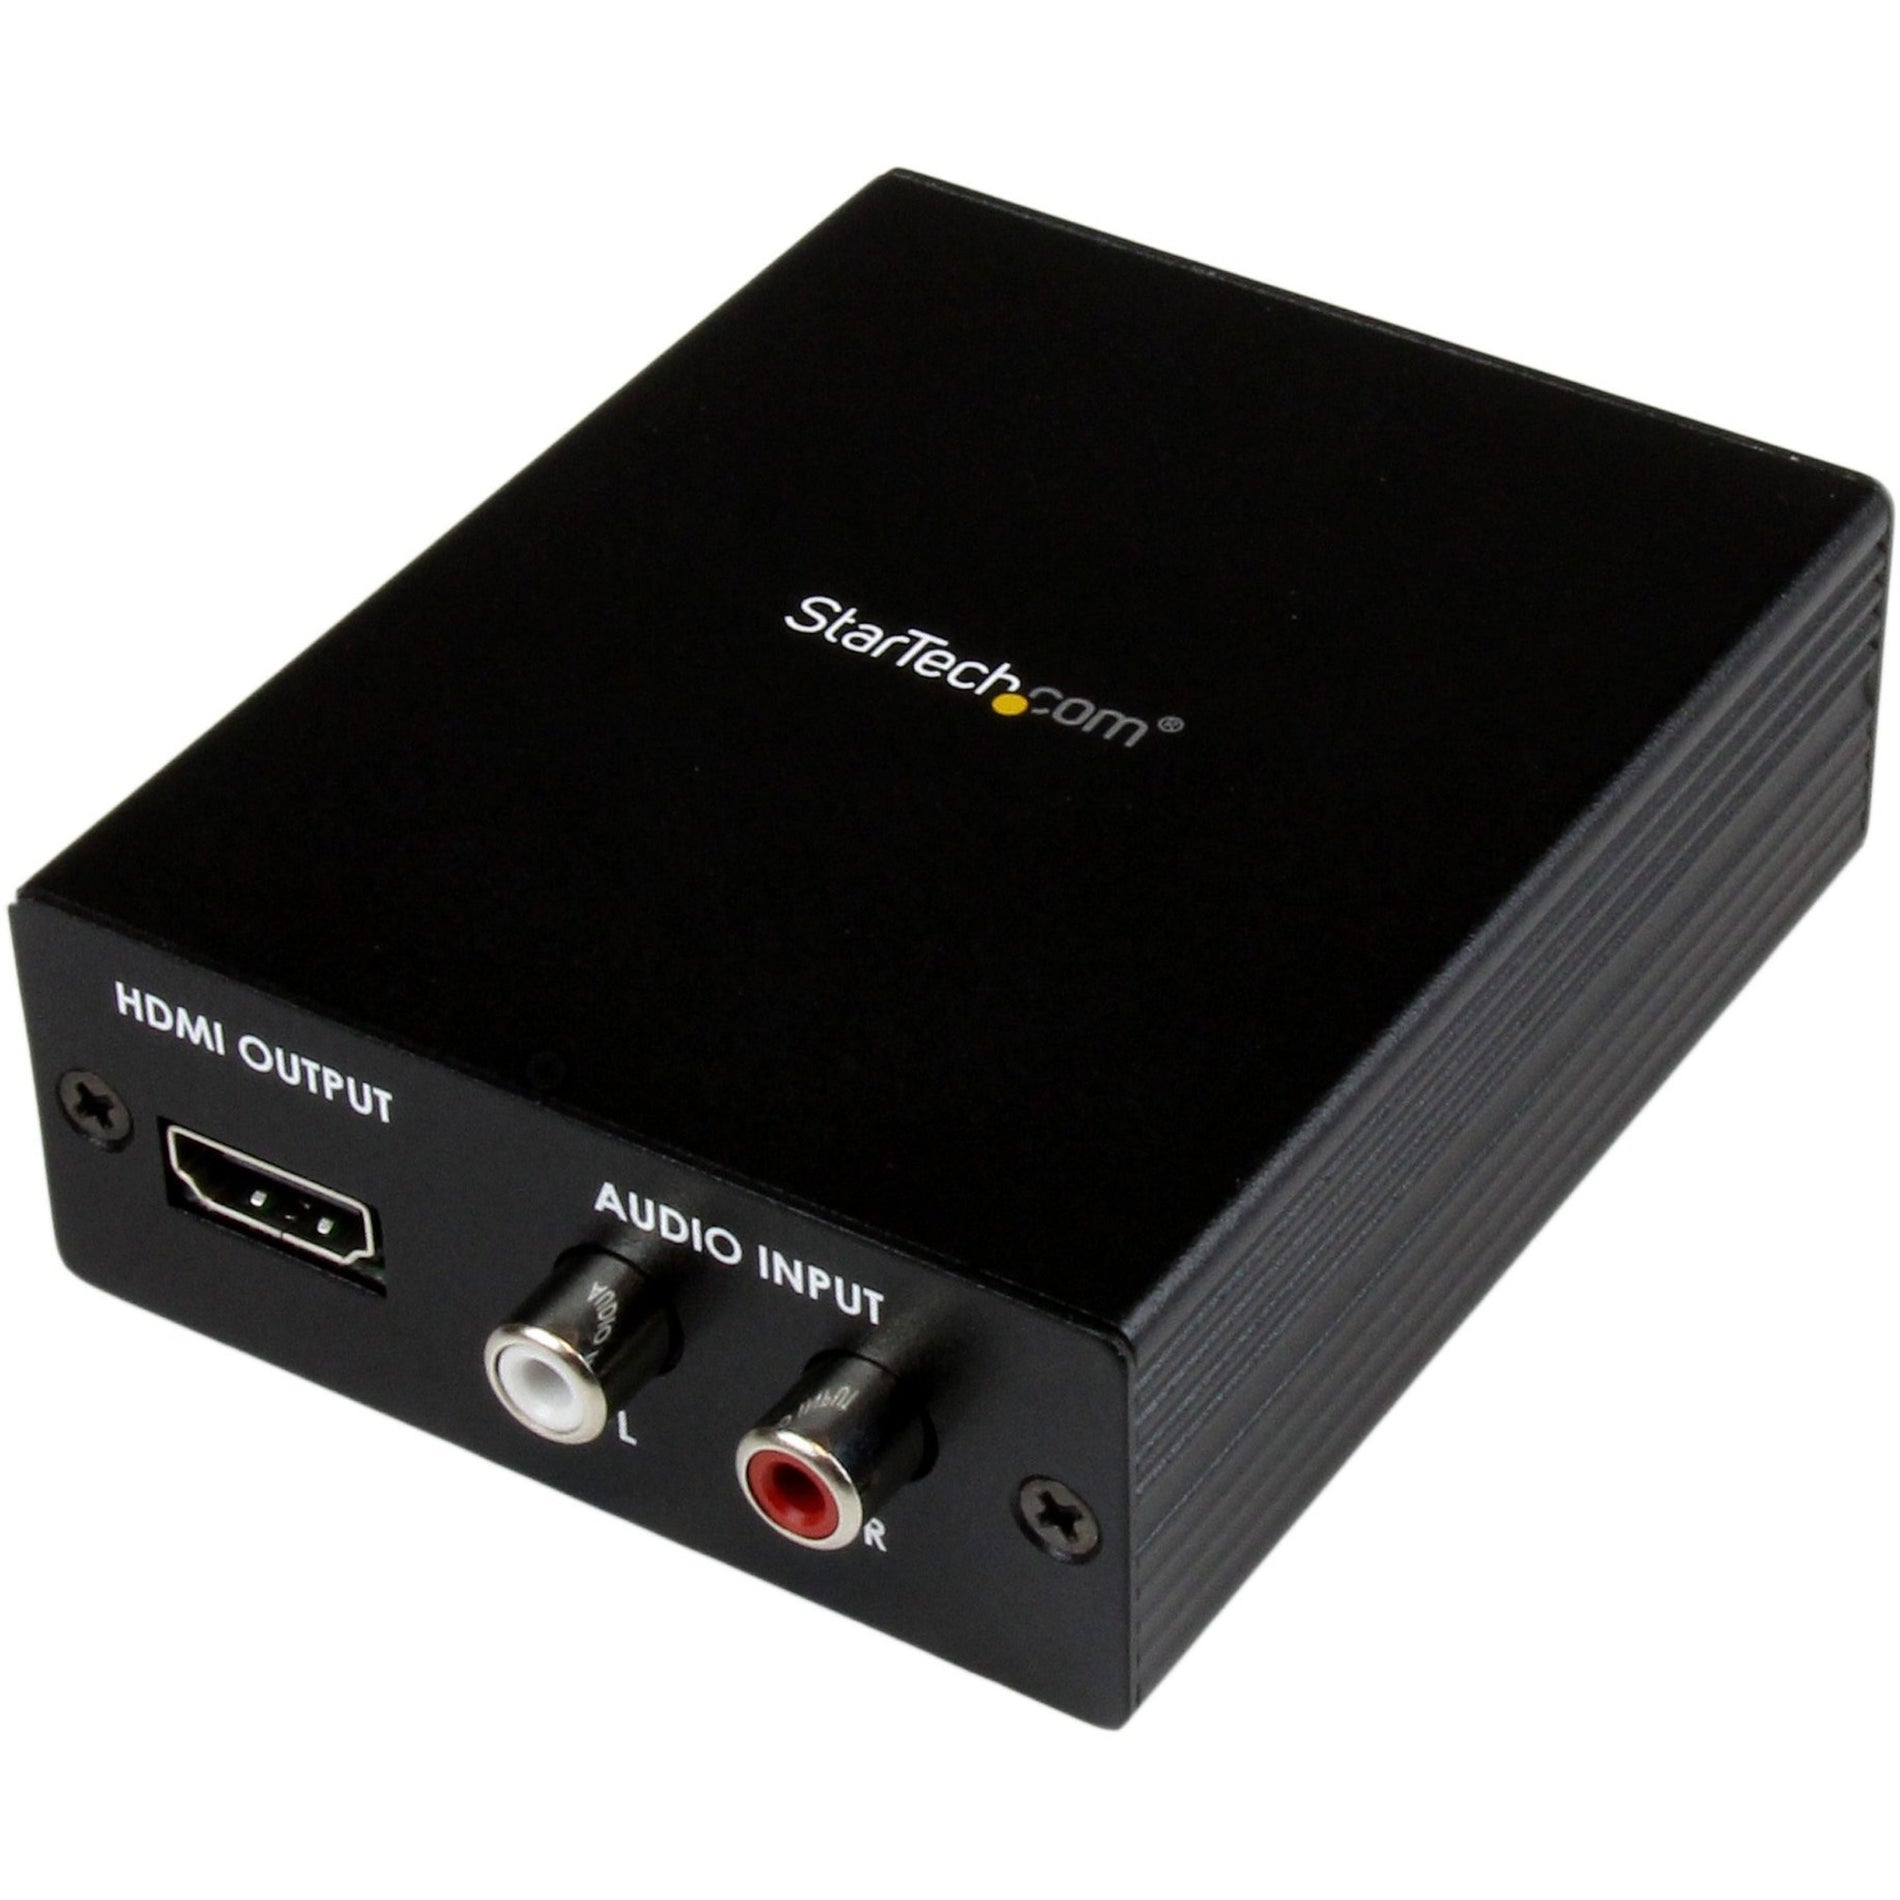 StarTech.com VGA2HD2 Component / VGA Video and Audio to HDMI Converter - PC to HDMI - 1920x1200, TAA Compliant